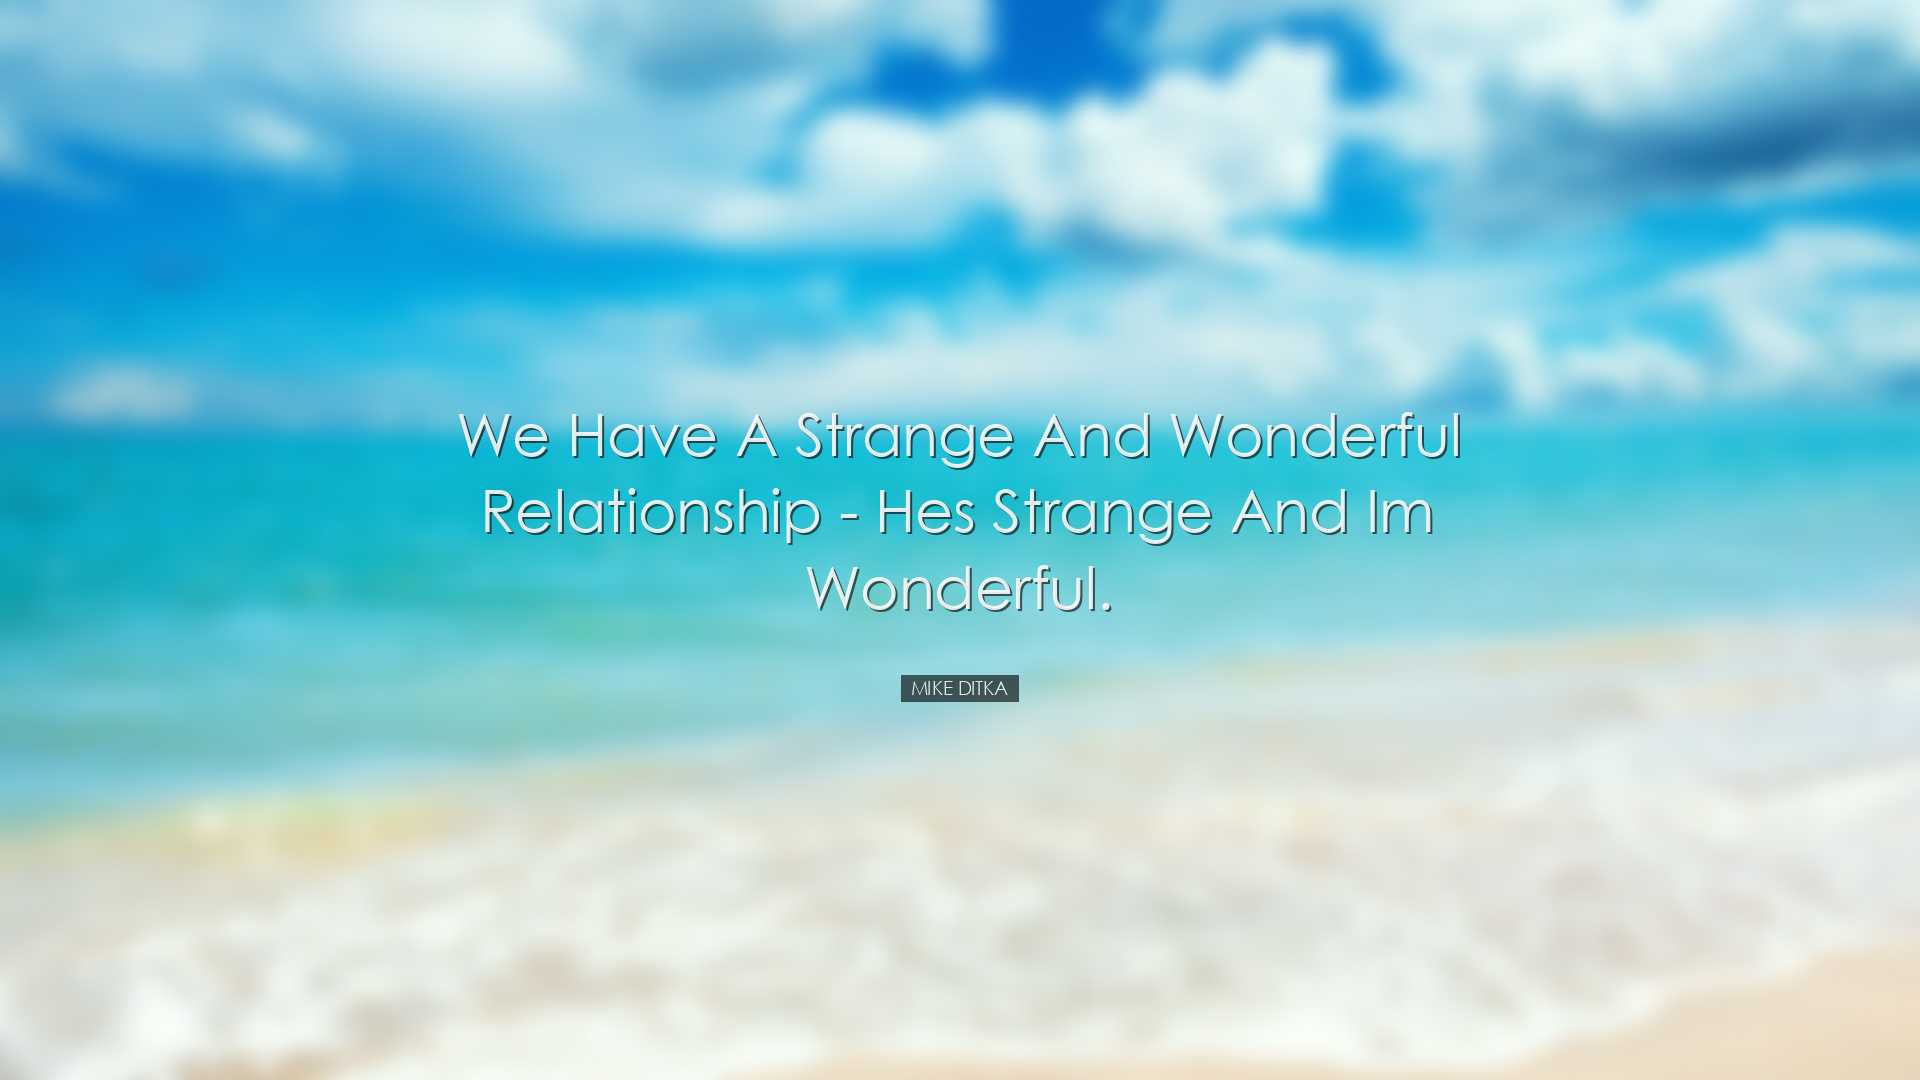 We have a strange and wonderful relationship - hes strange and Im